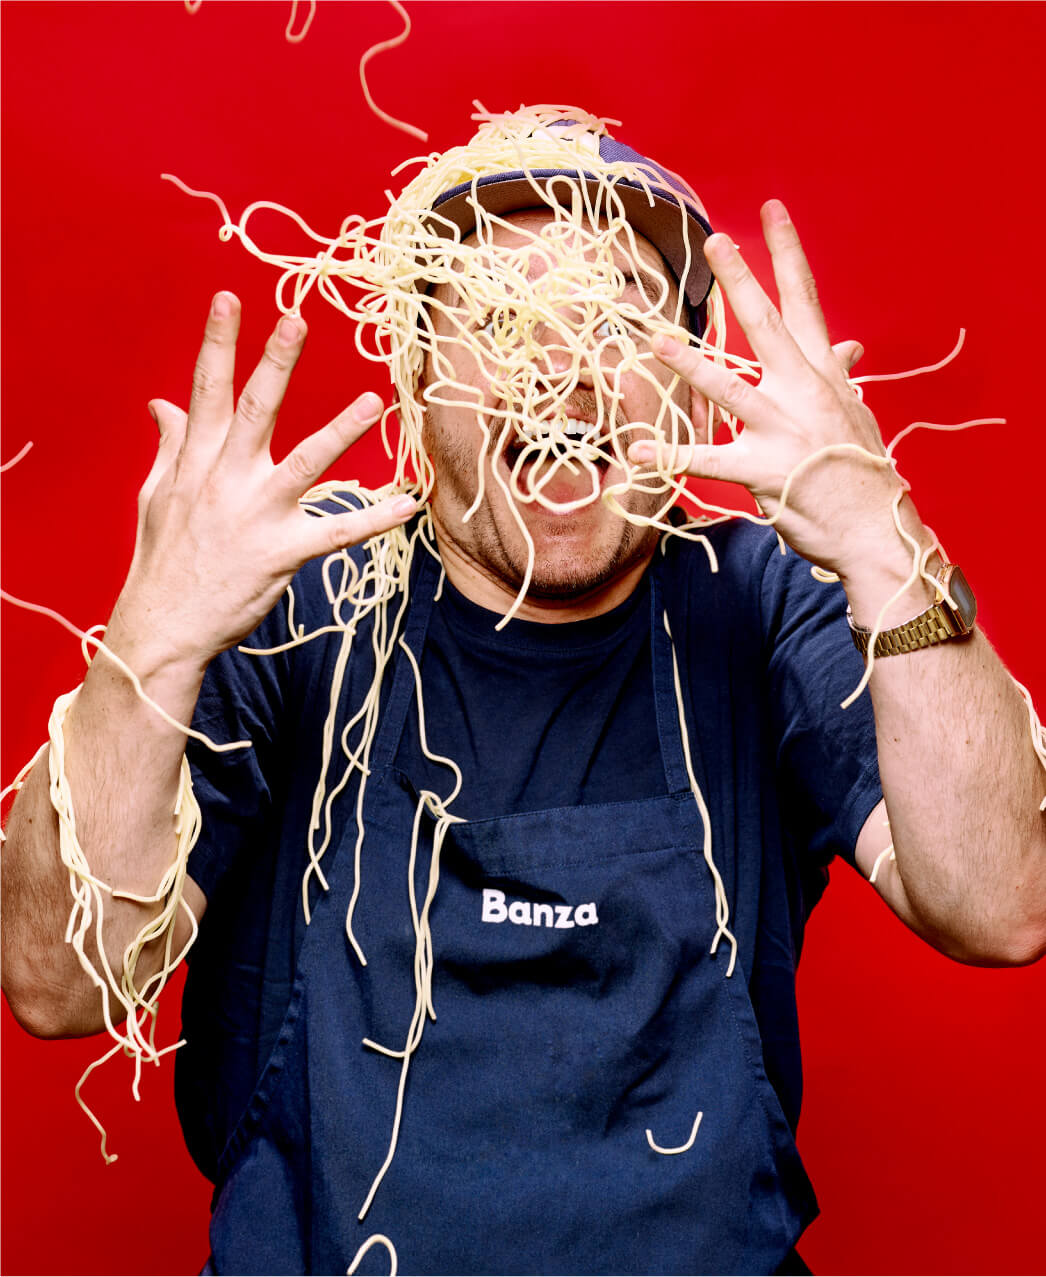 banza-mike-spaghetti@2x